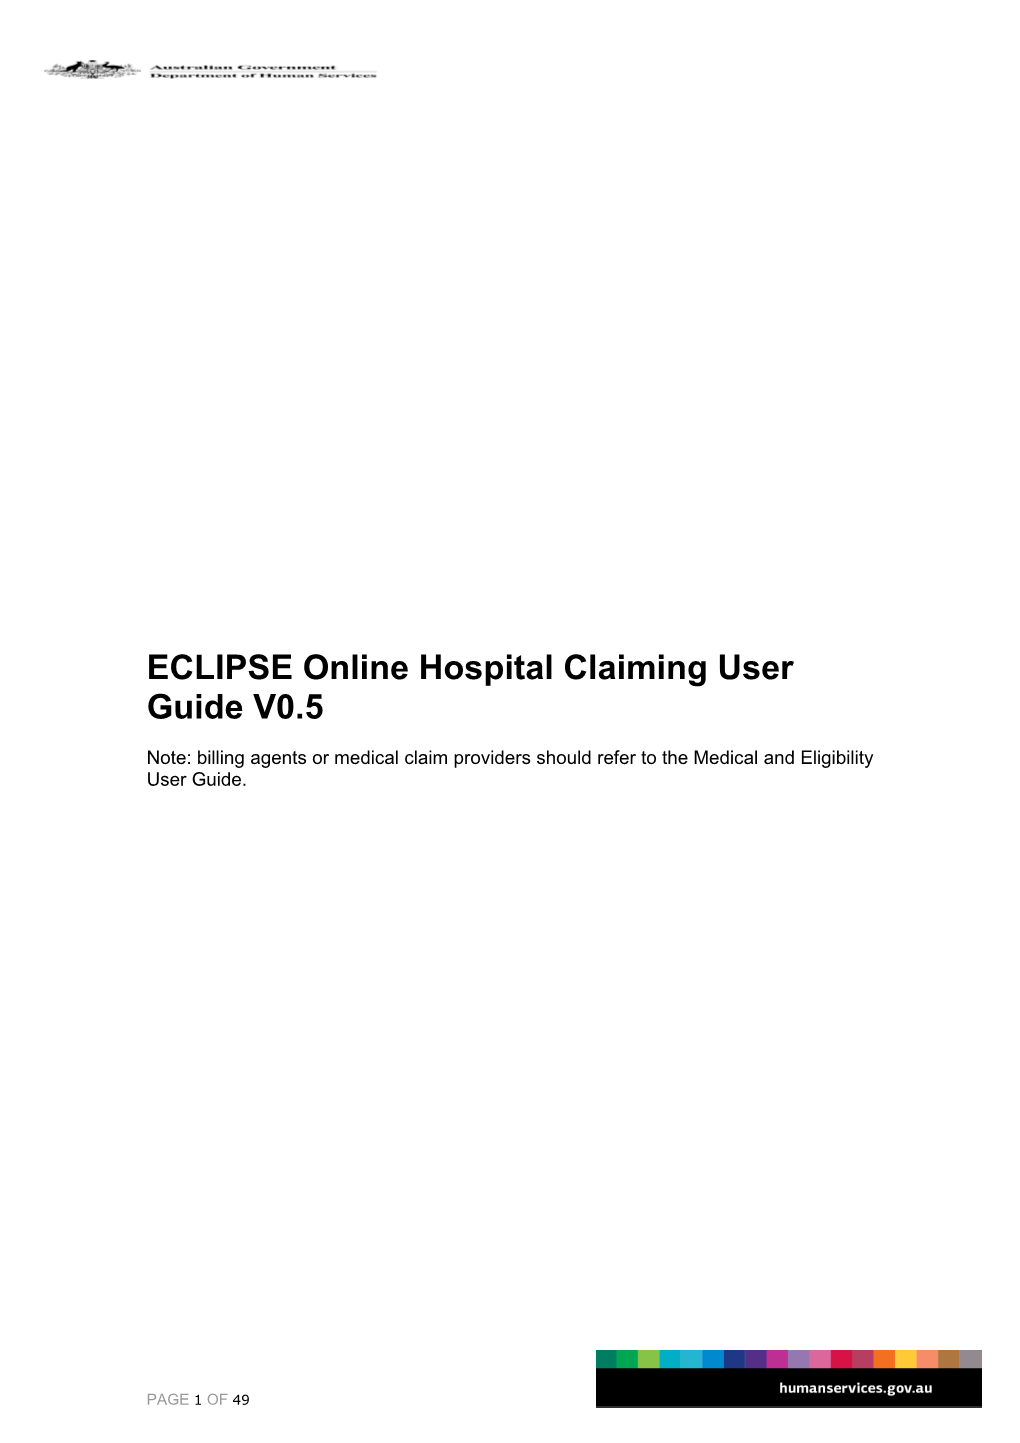 ECLIPSE Online Hospital Claiming User Guide V0.5